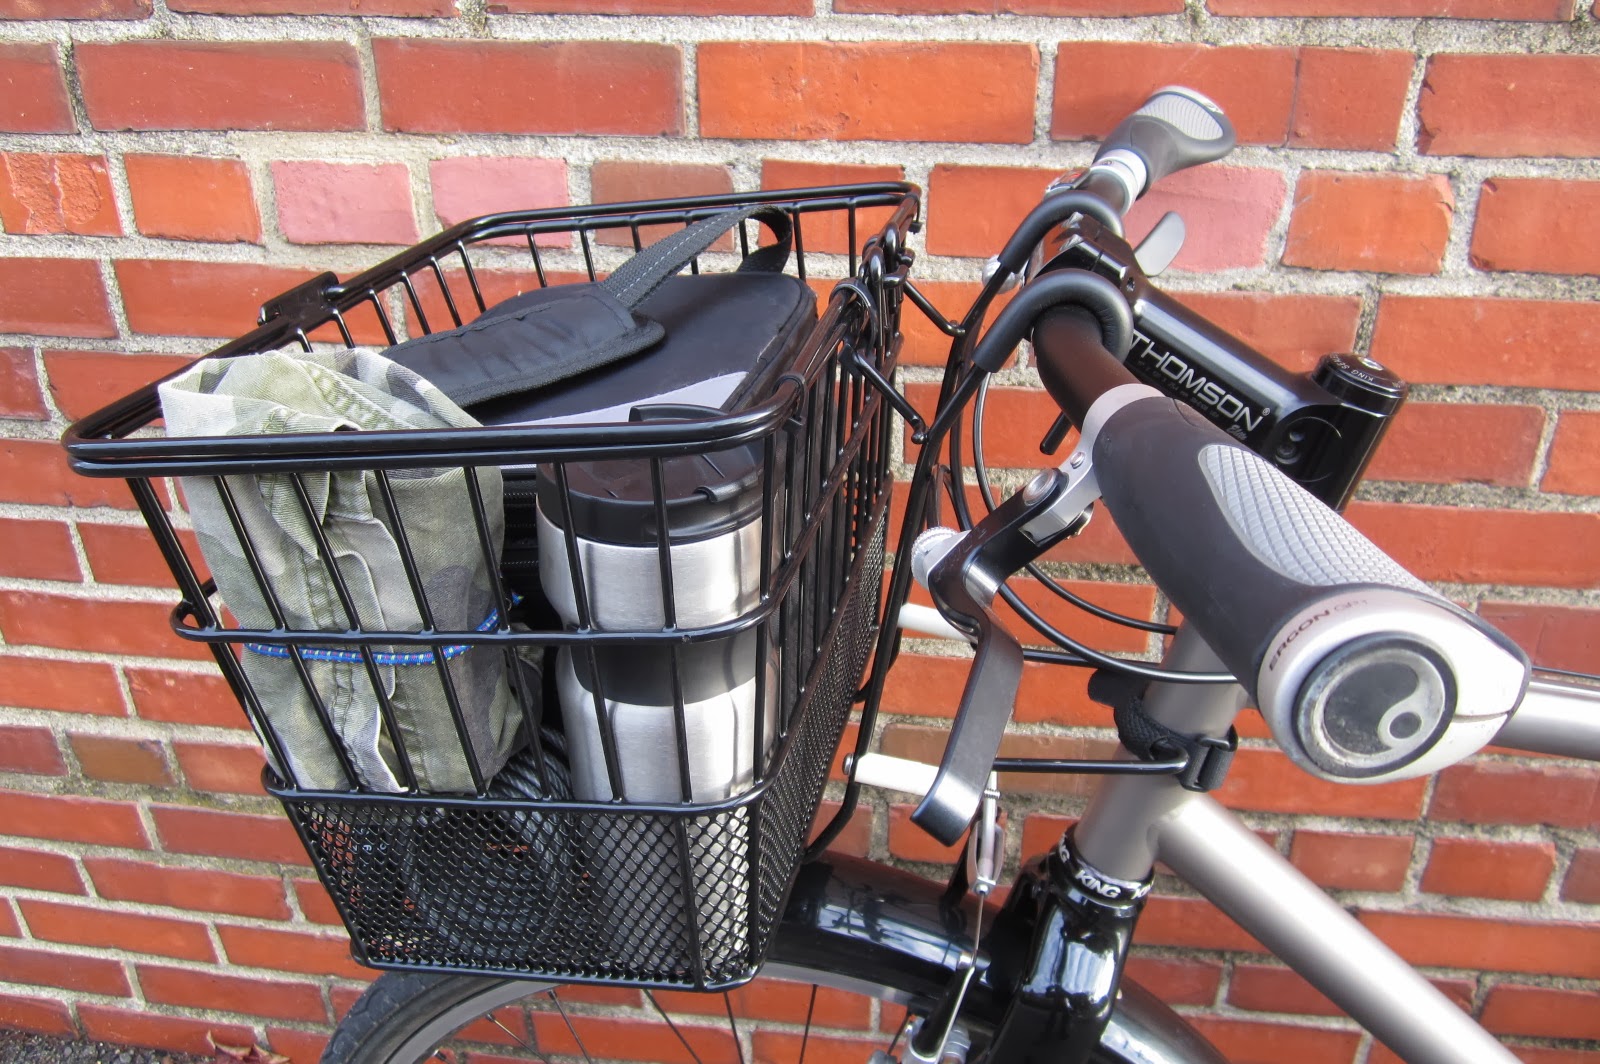 sunlite bicycle basket